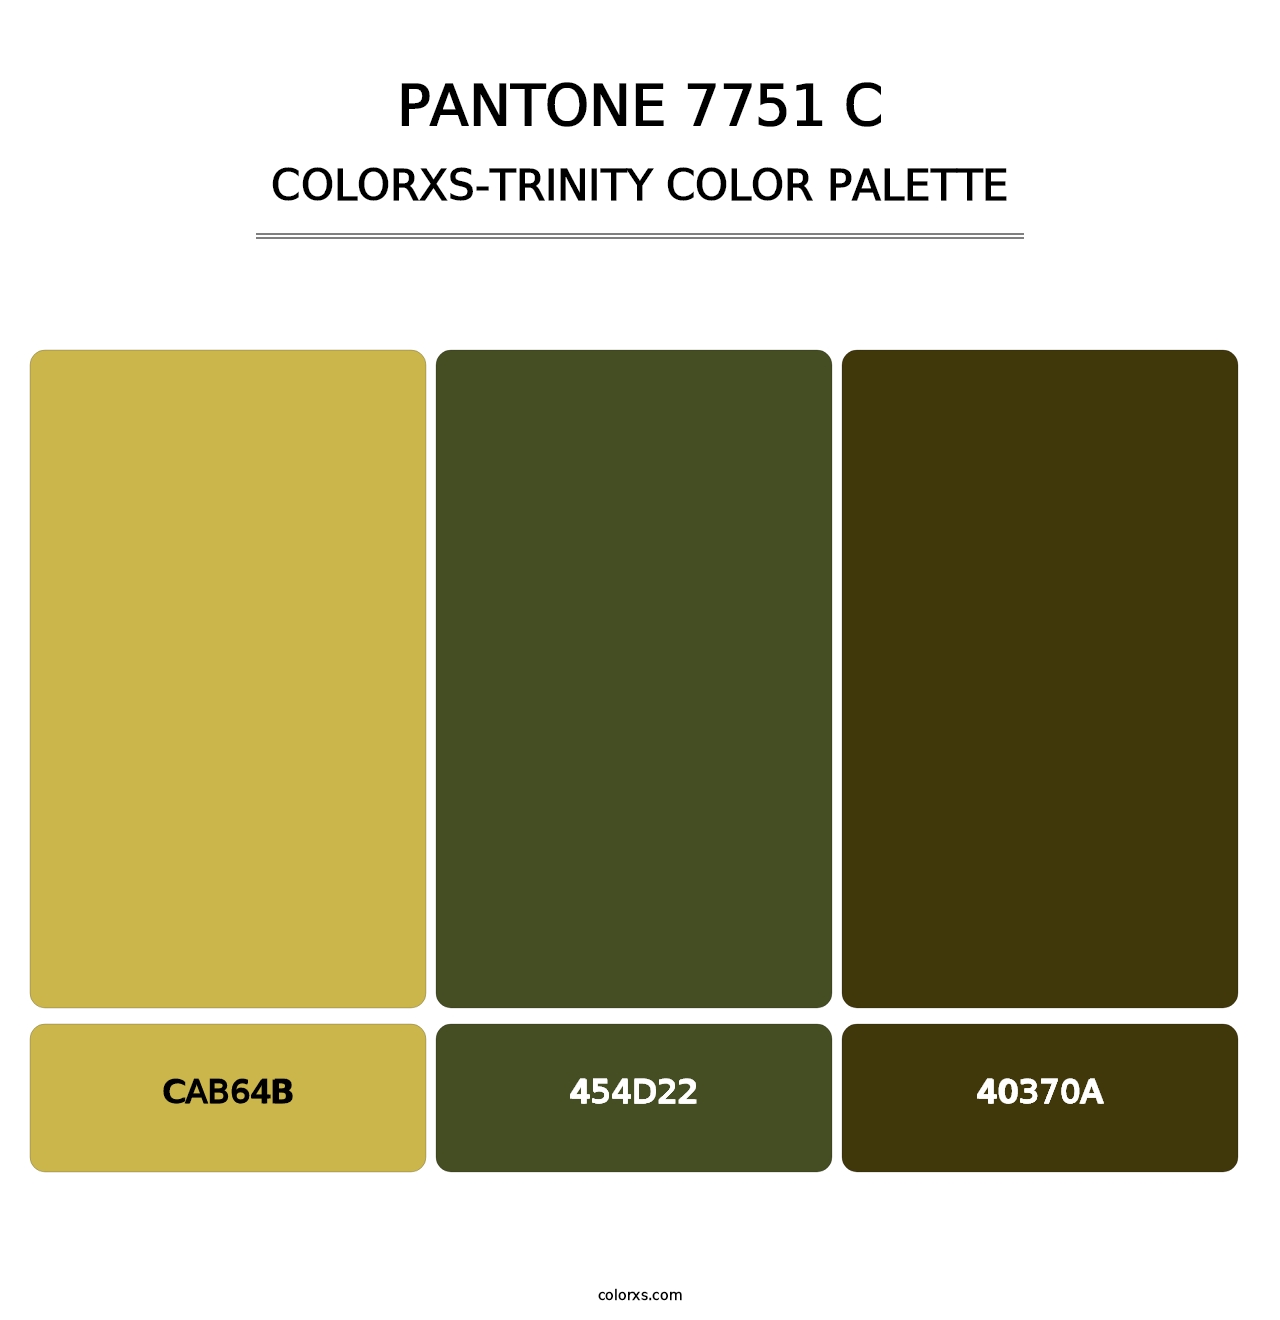 PANTONE 7751 C - Colorxs Trinity Palette